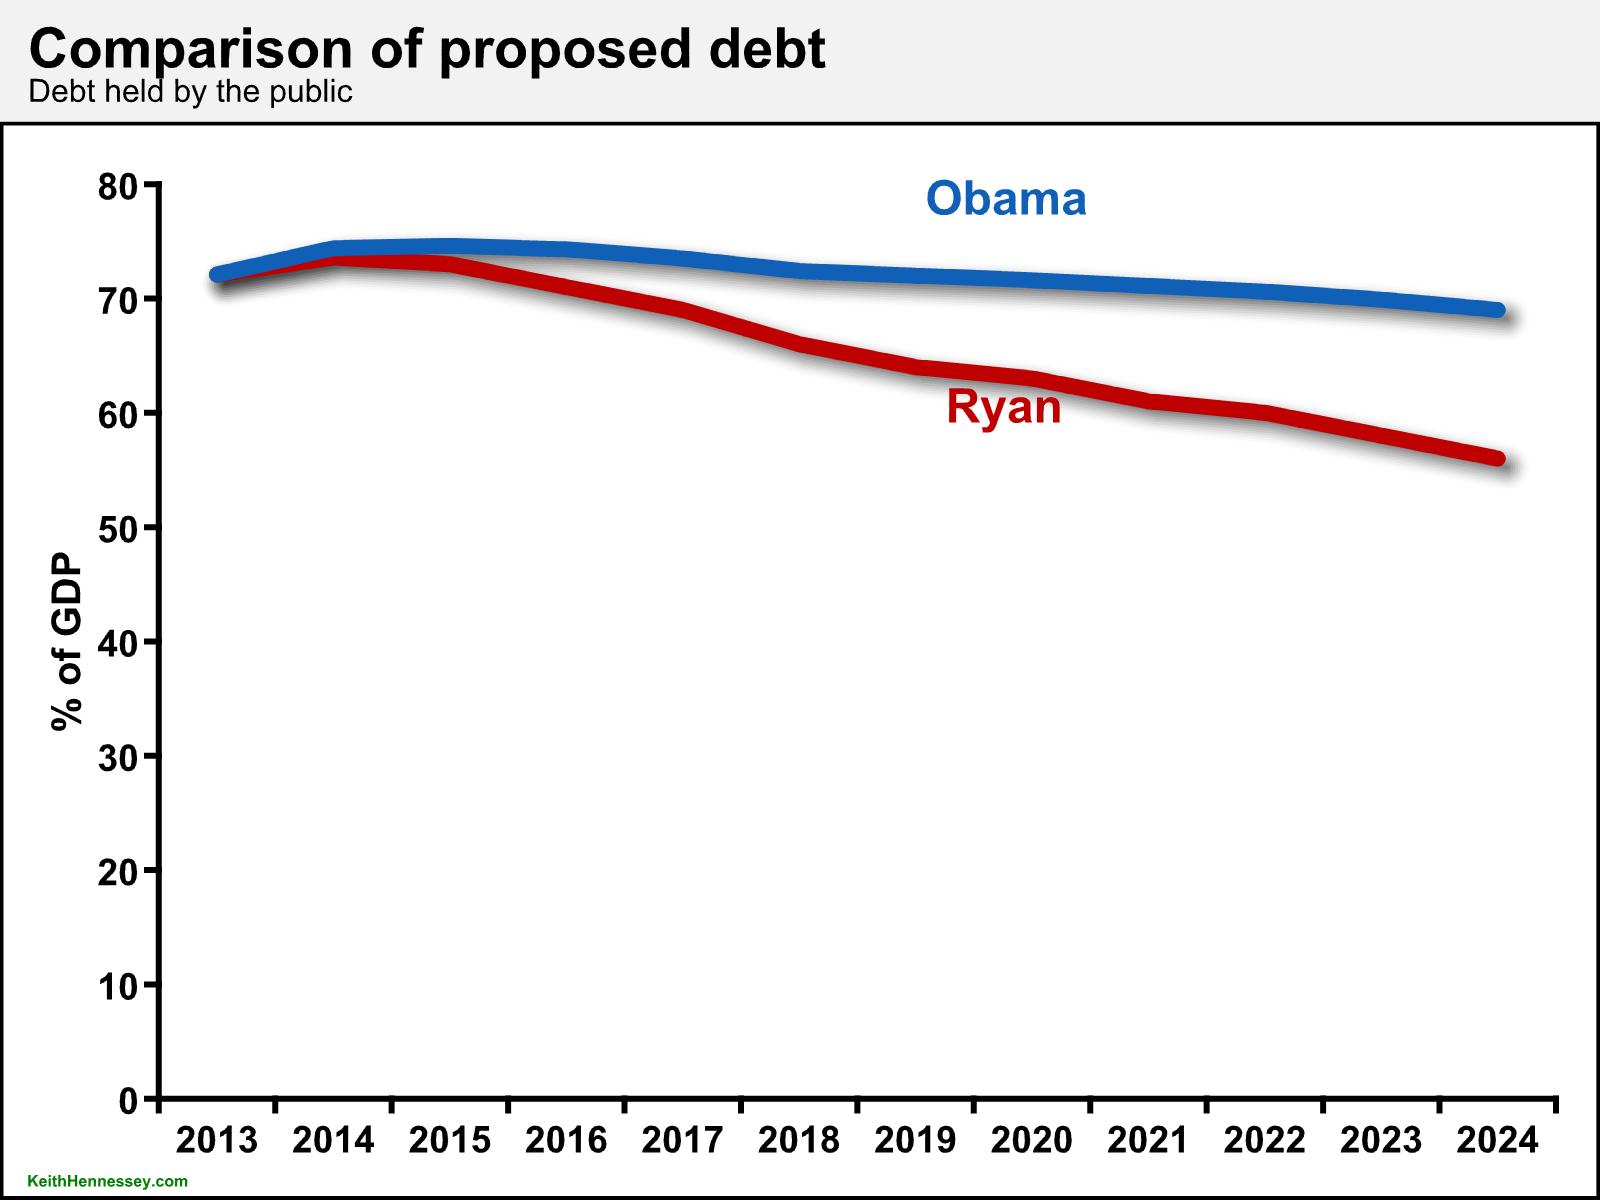 ryan v obama short-term debt (apr 2014)